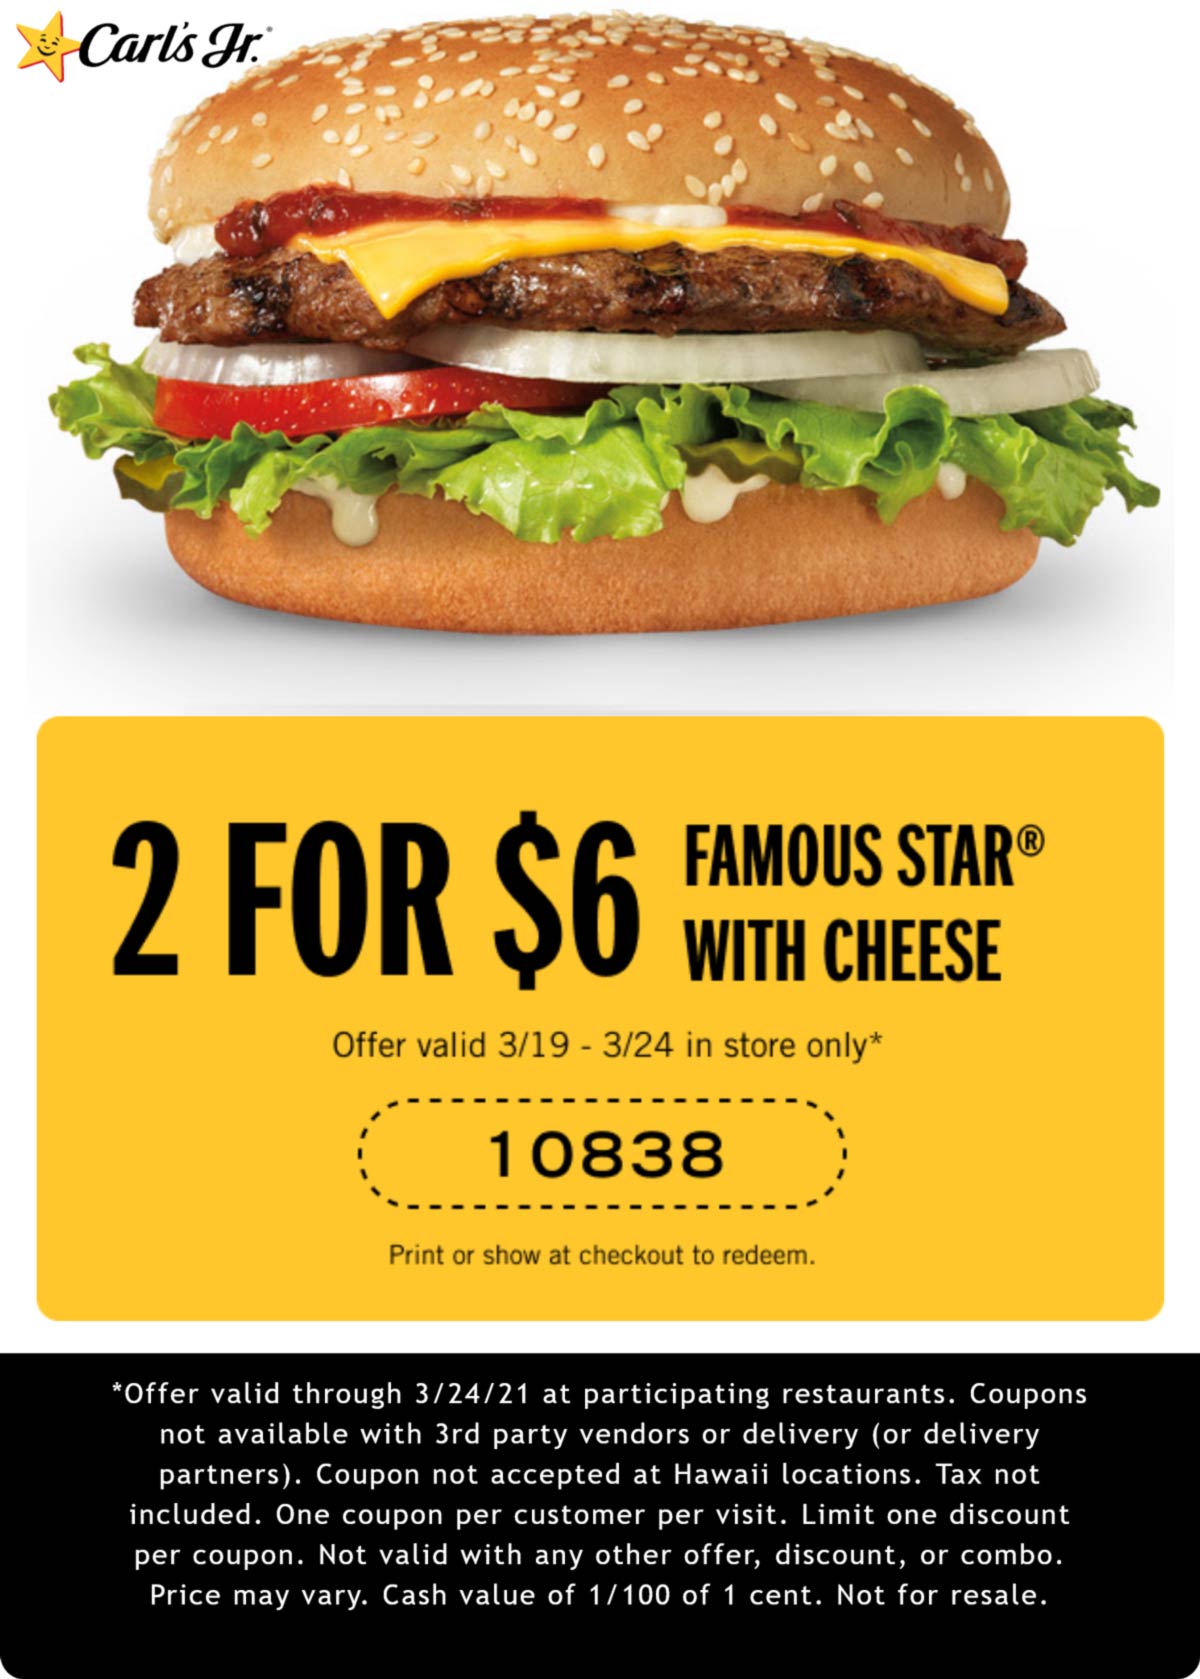 Carls Jr. restaurants Coupon  2 famous star cheeseburgers for $6 at Carls Jr. restaurants #carlsjr 